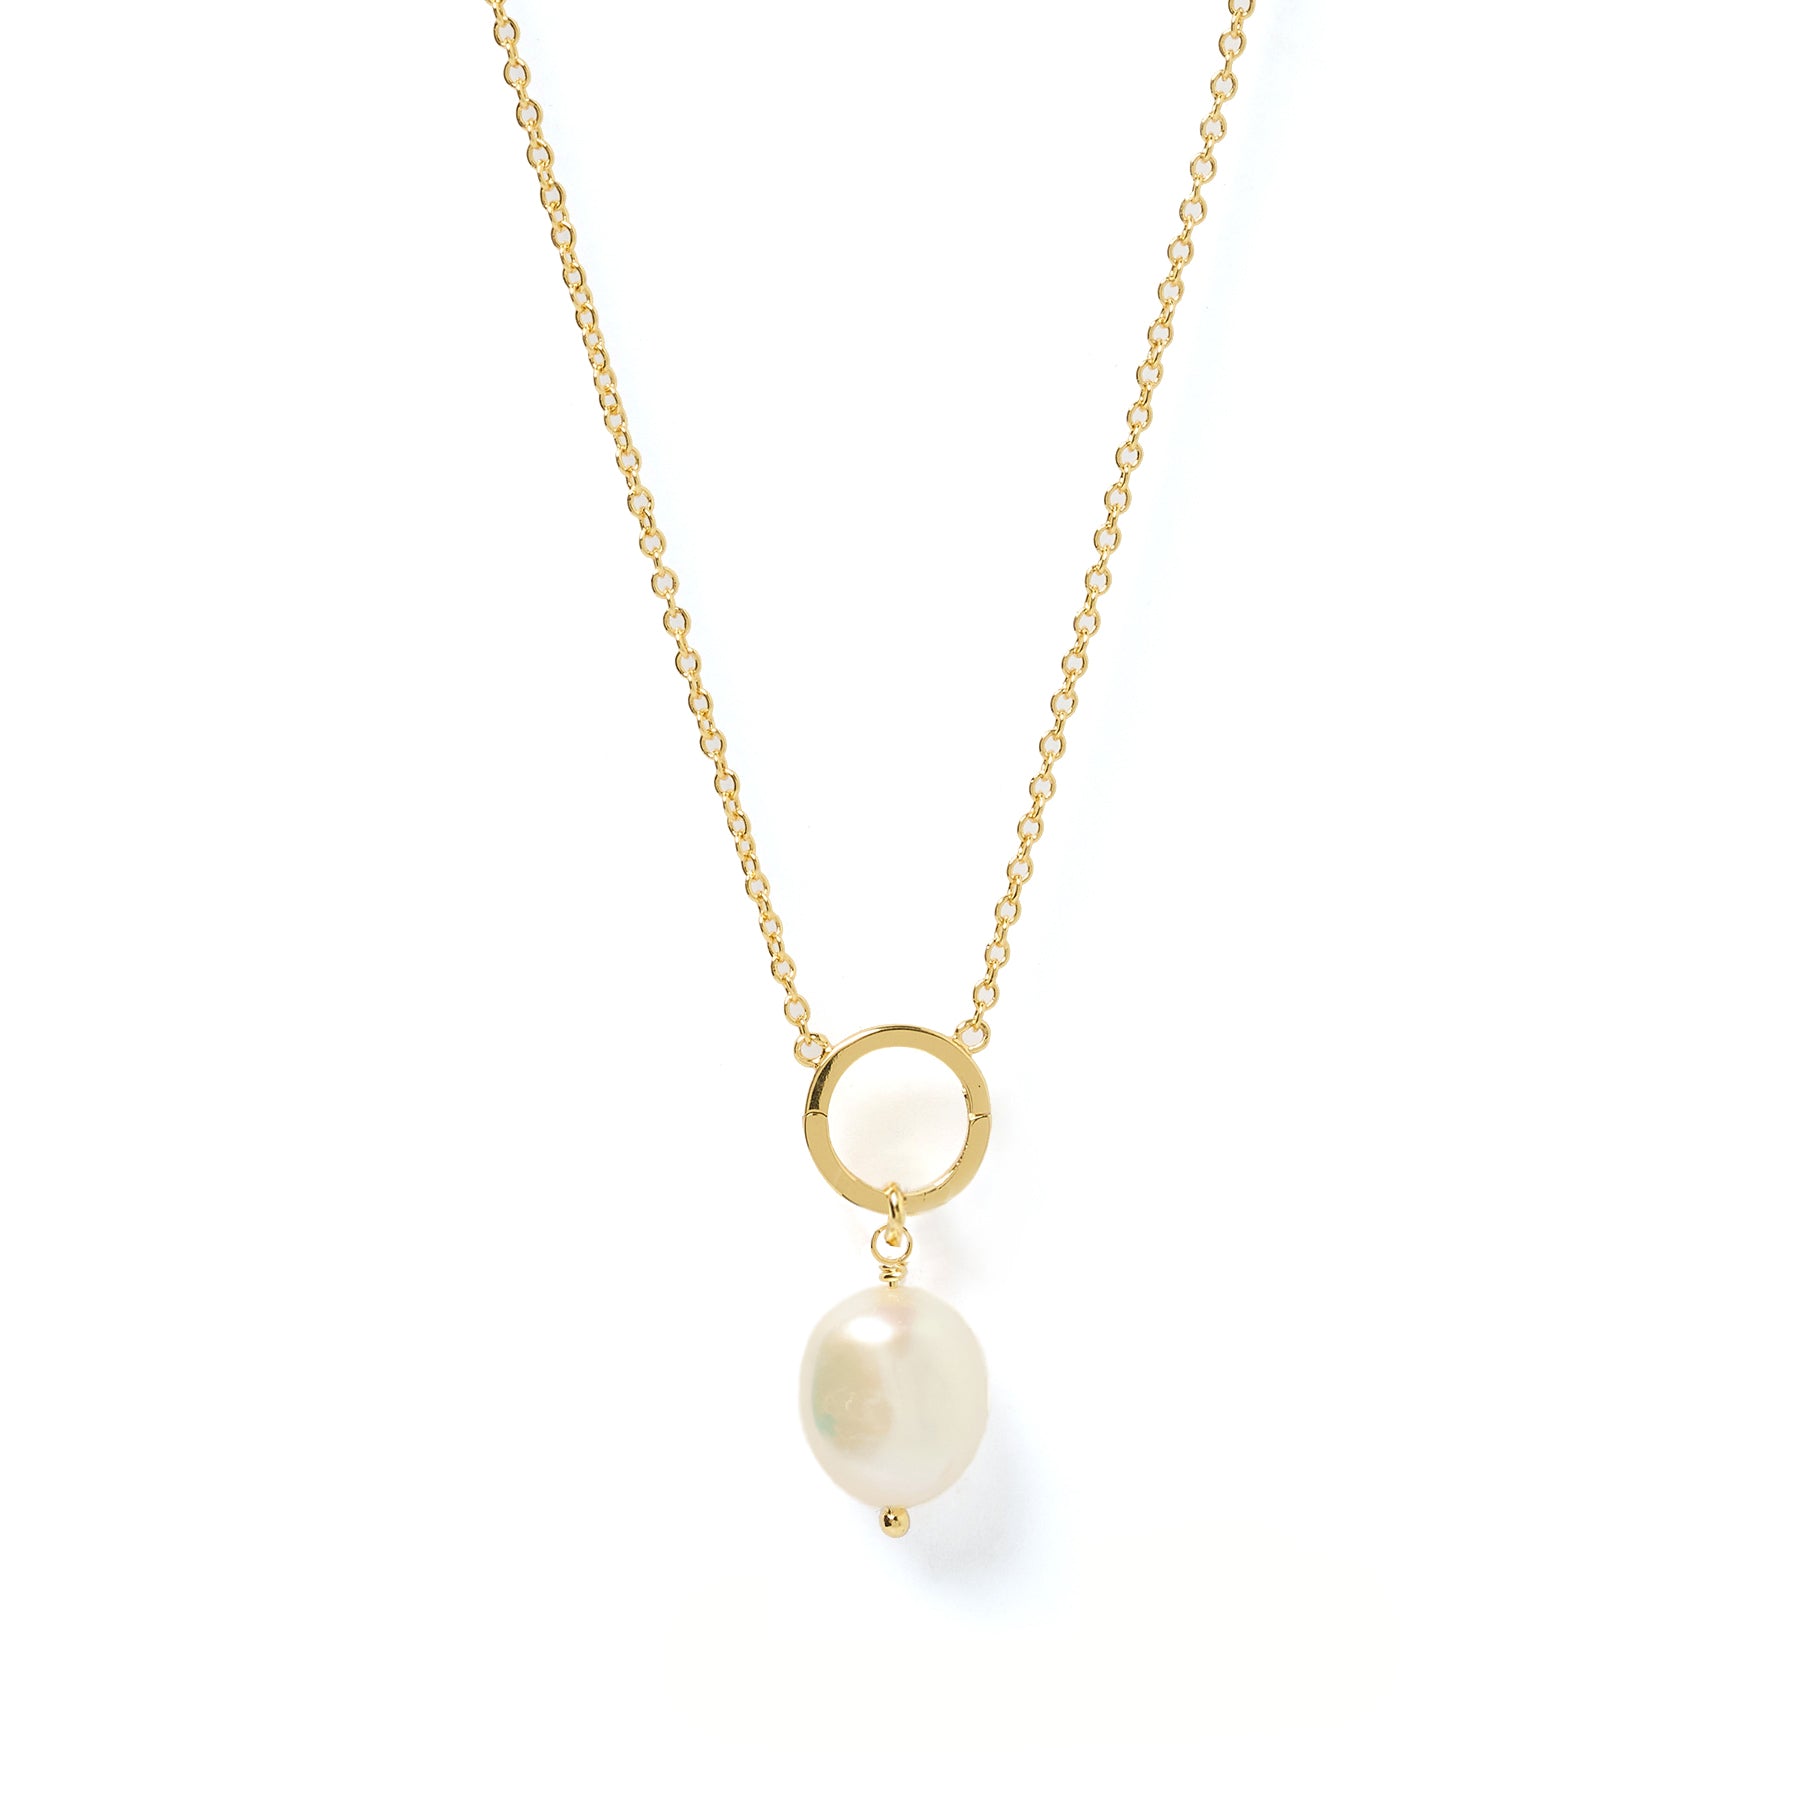 Akira Pearl 'O' Charm Necklace